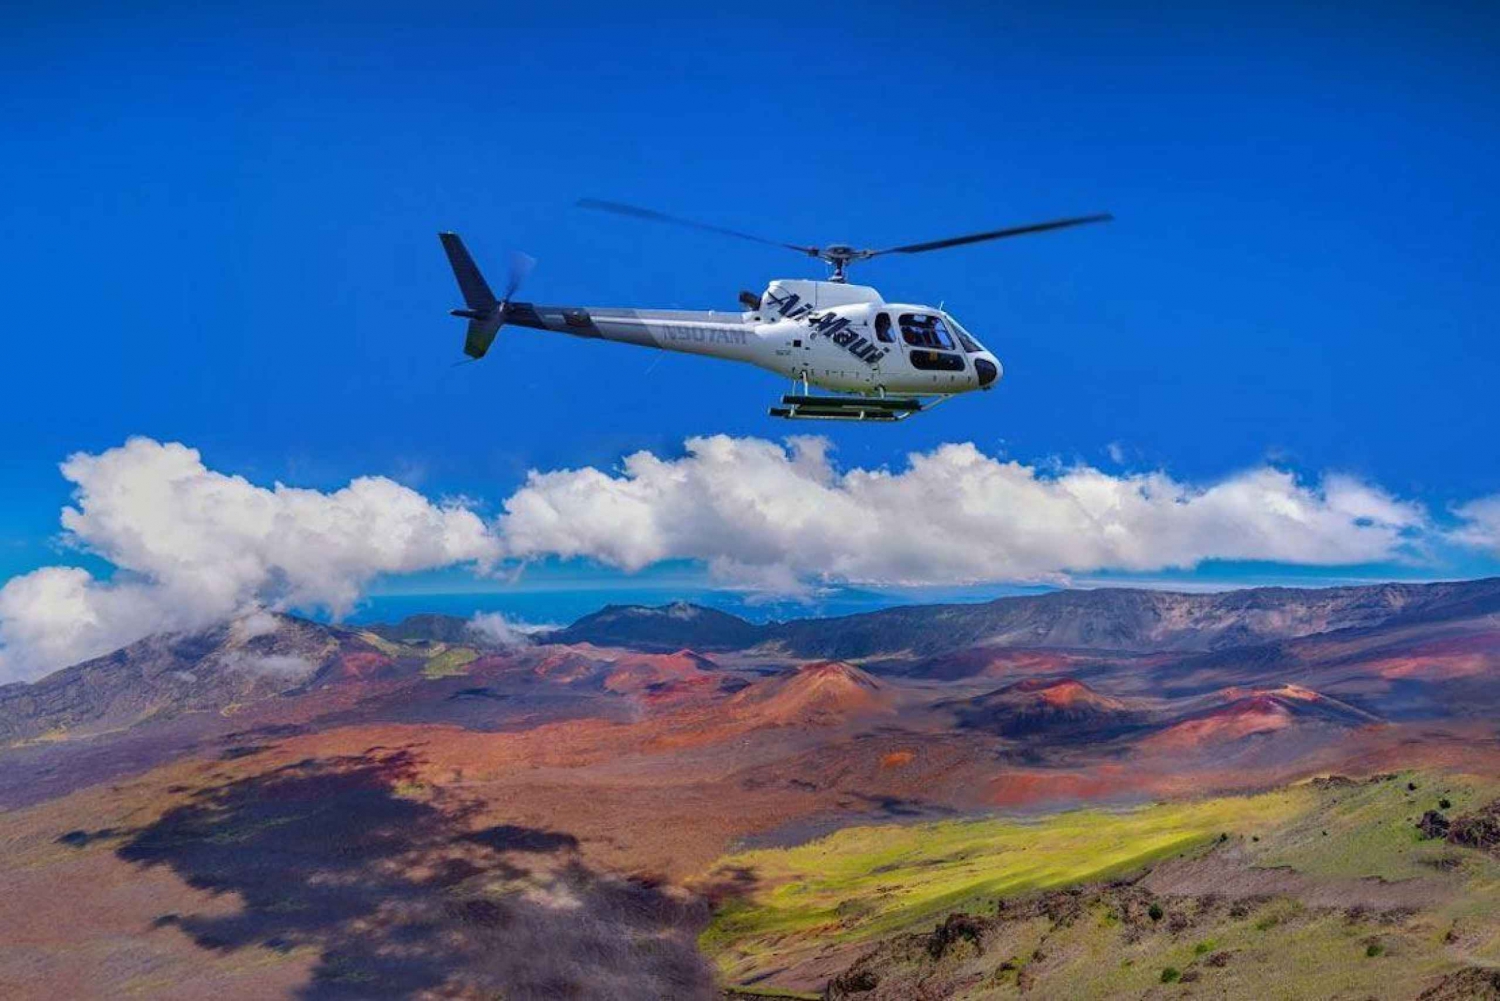 Hana Rainforest and Haleakala Crater 45-min Helicopter Tour